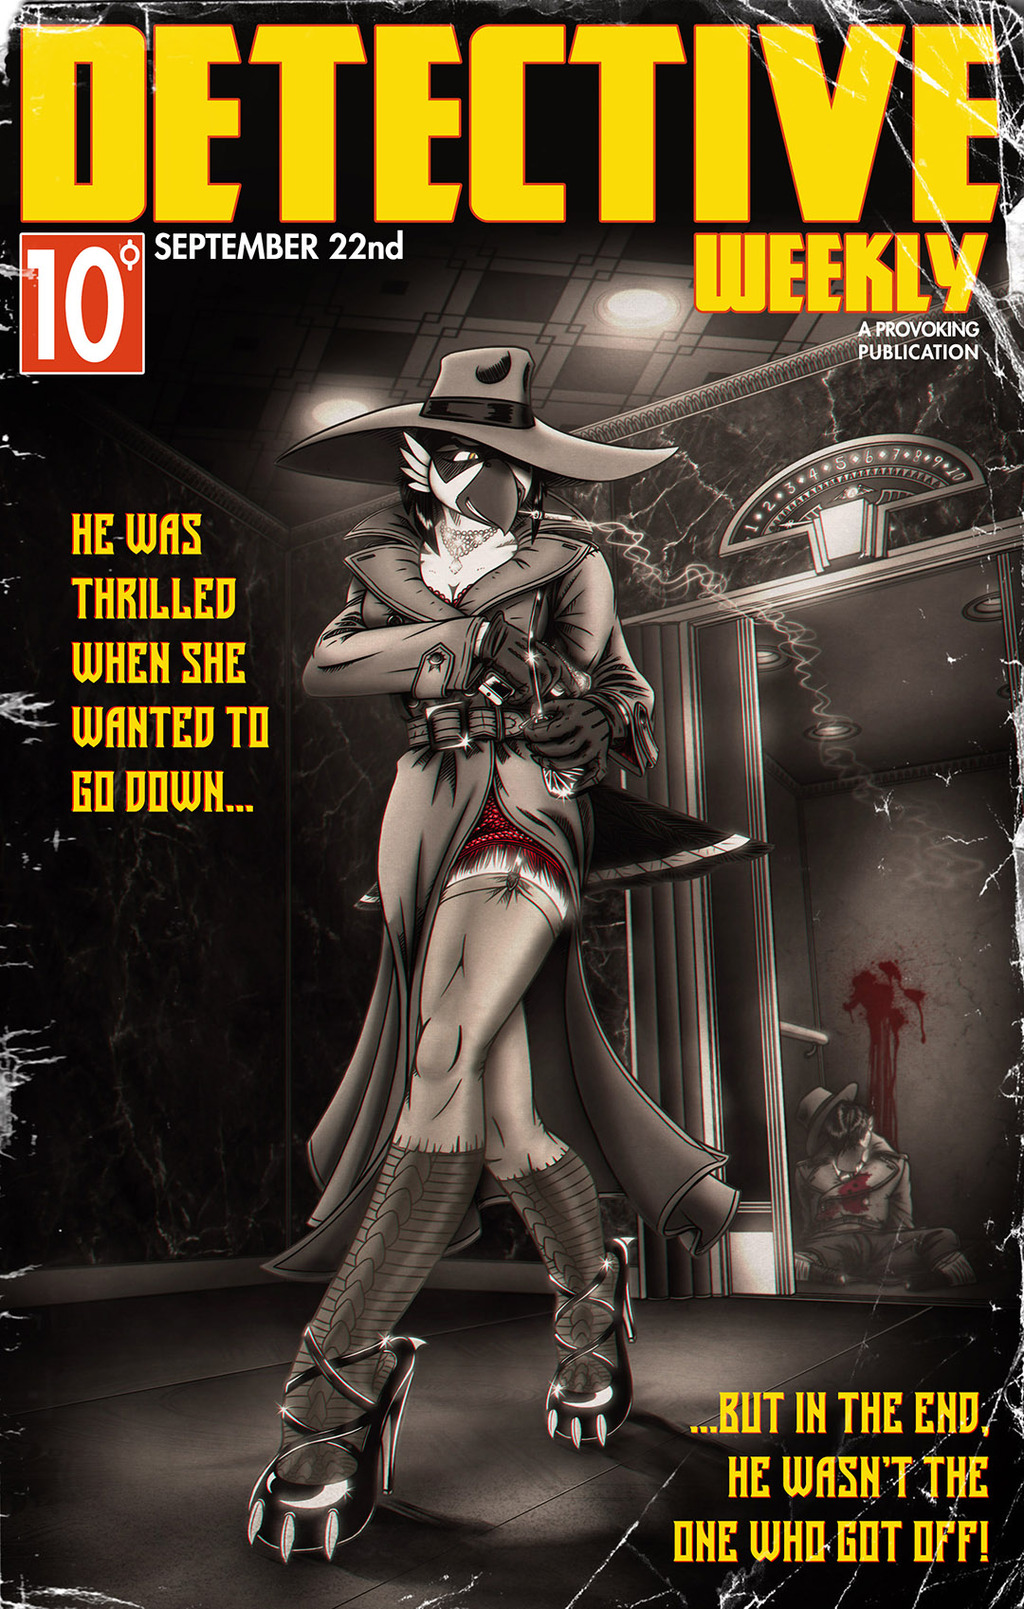 Viktoria - Detective Weekly Cover